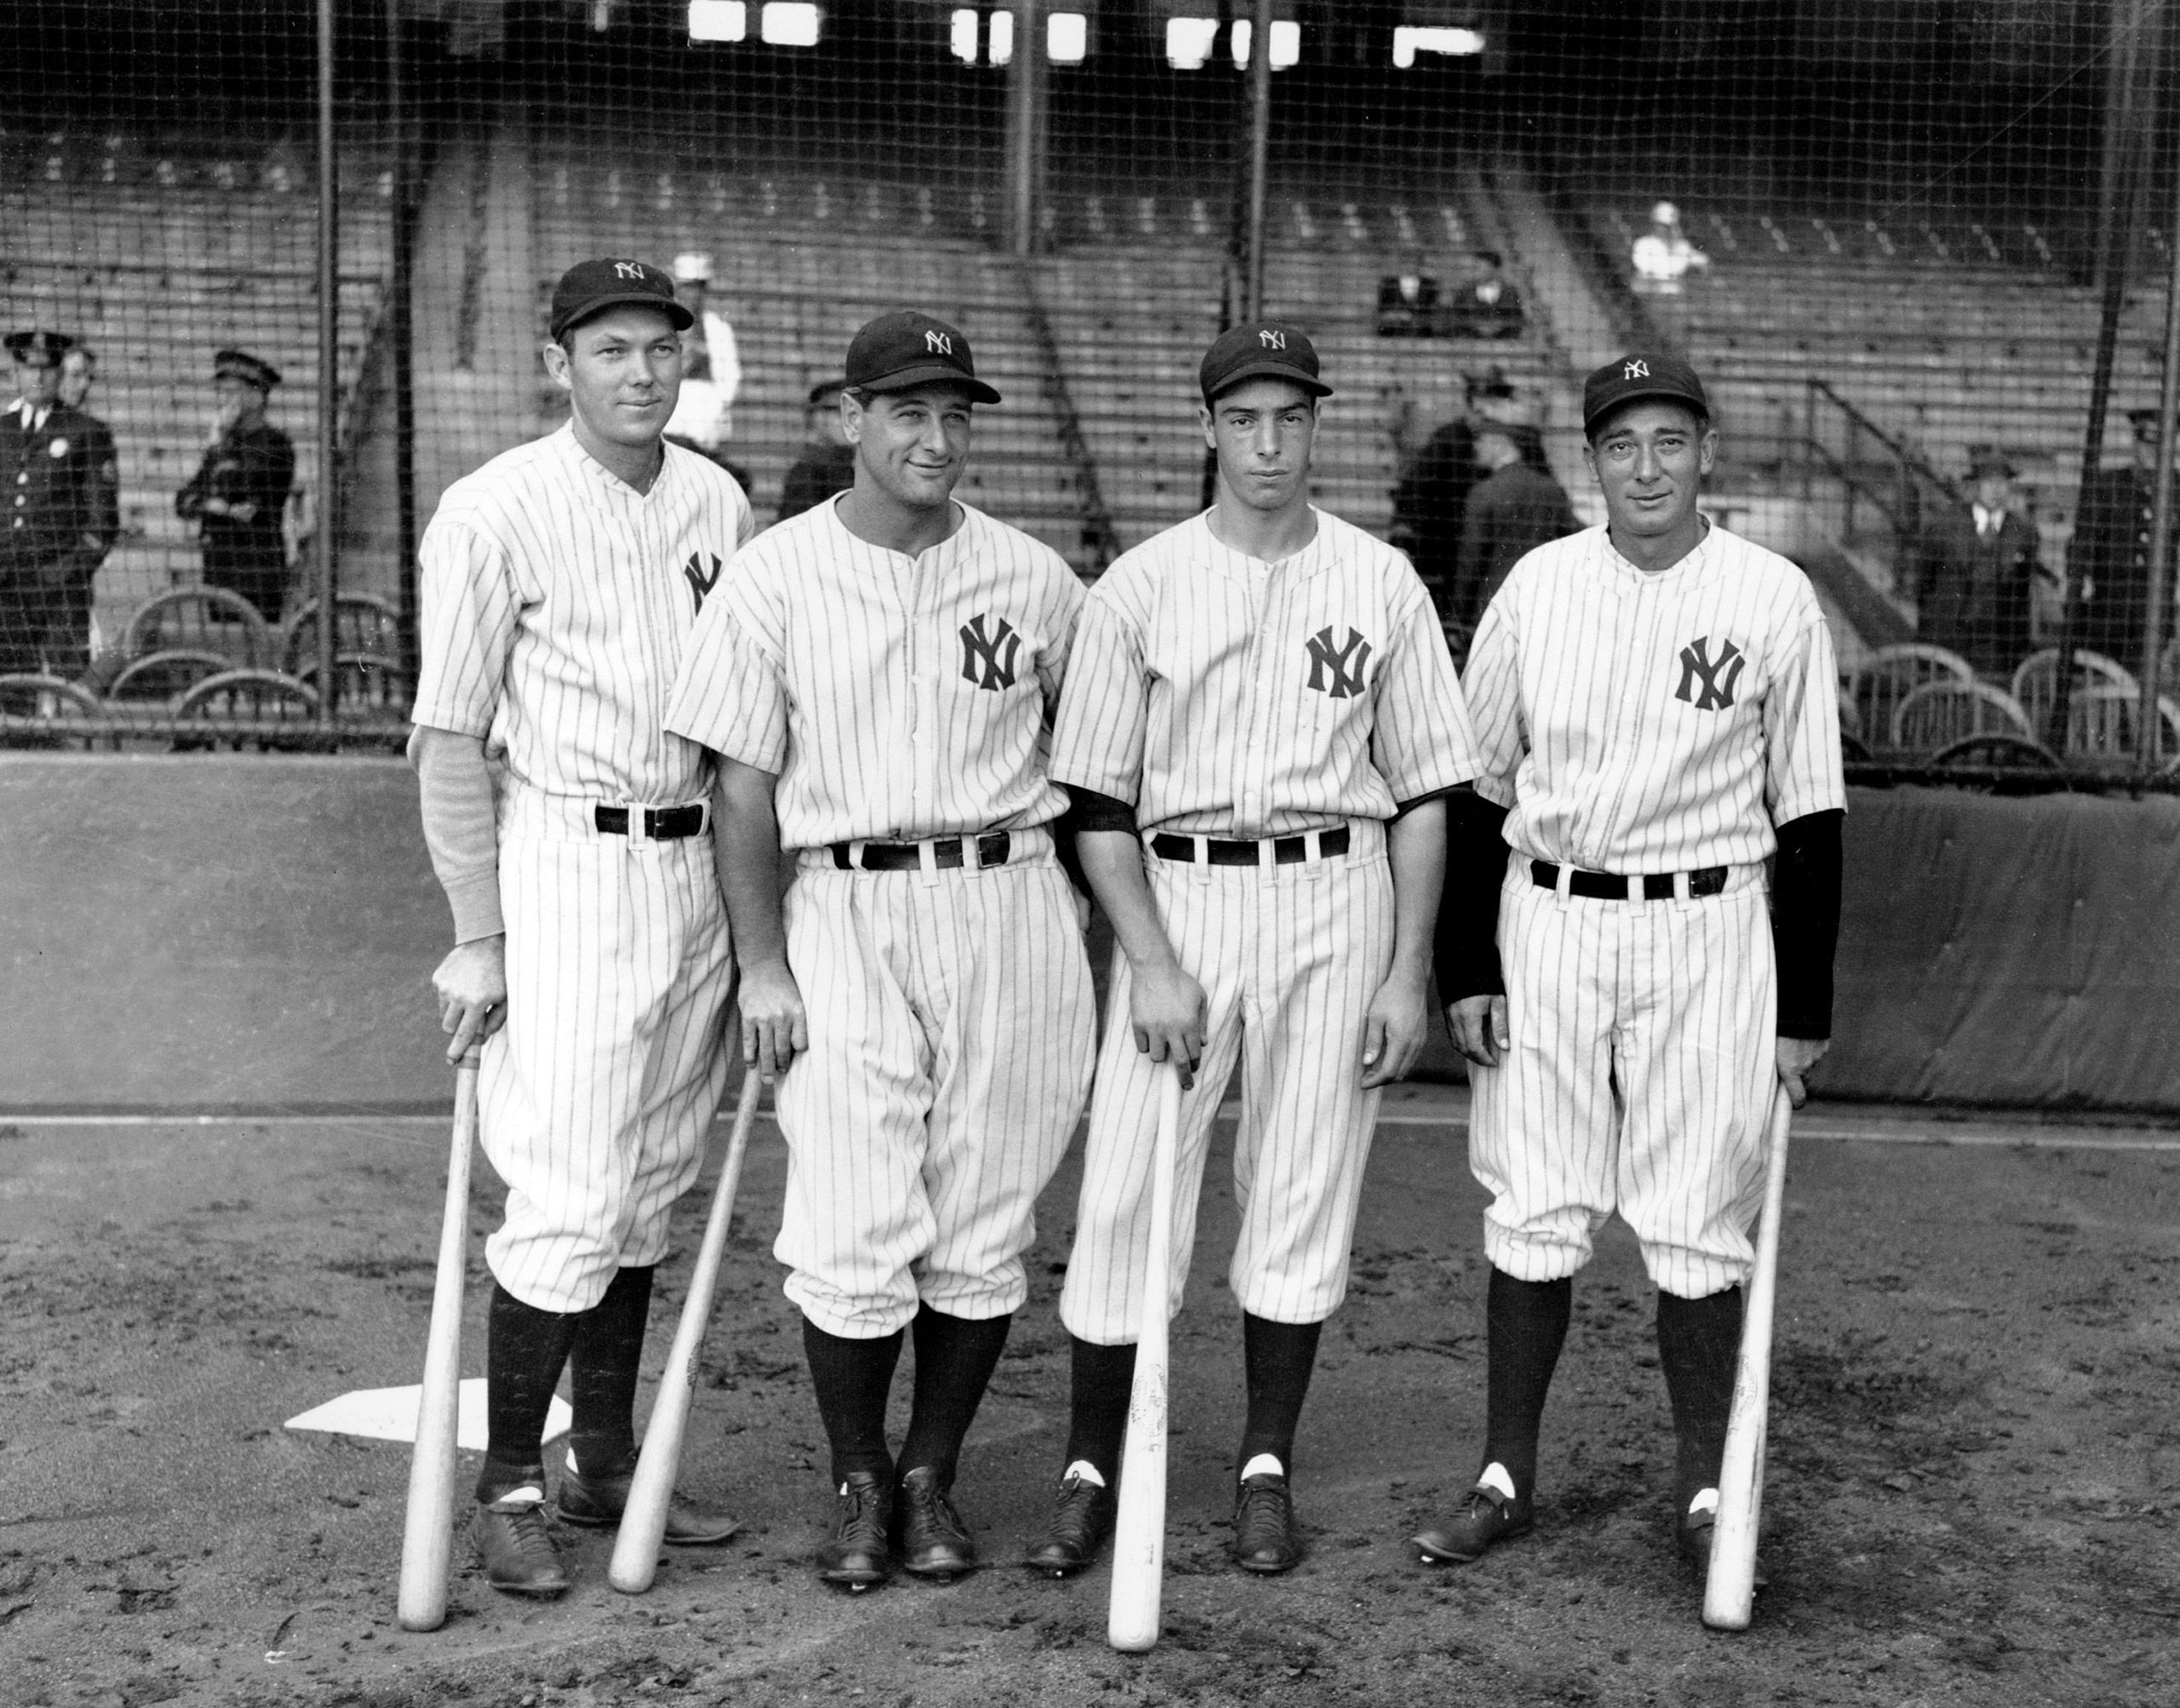 Joe Dimaggio Photo 8X10  New York Yankees 1941 Salutes Bat  Buy Any 2 Get 1 FREE 